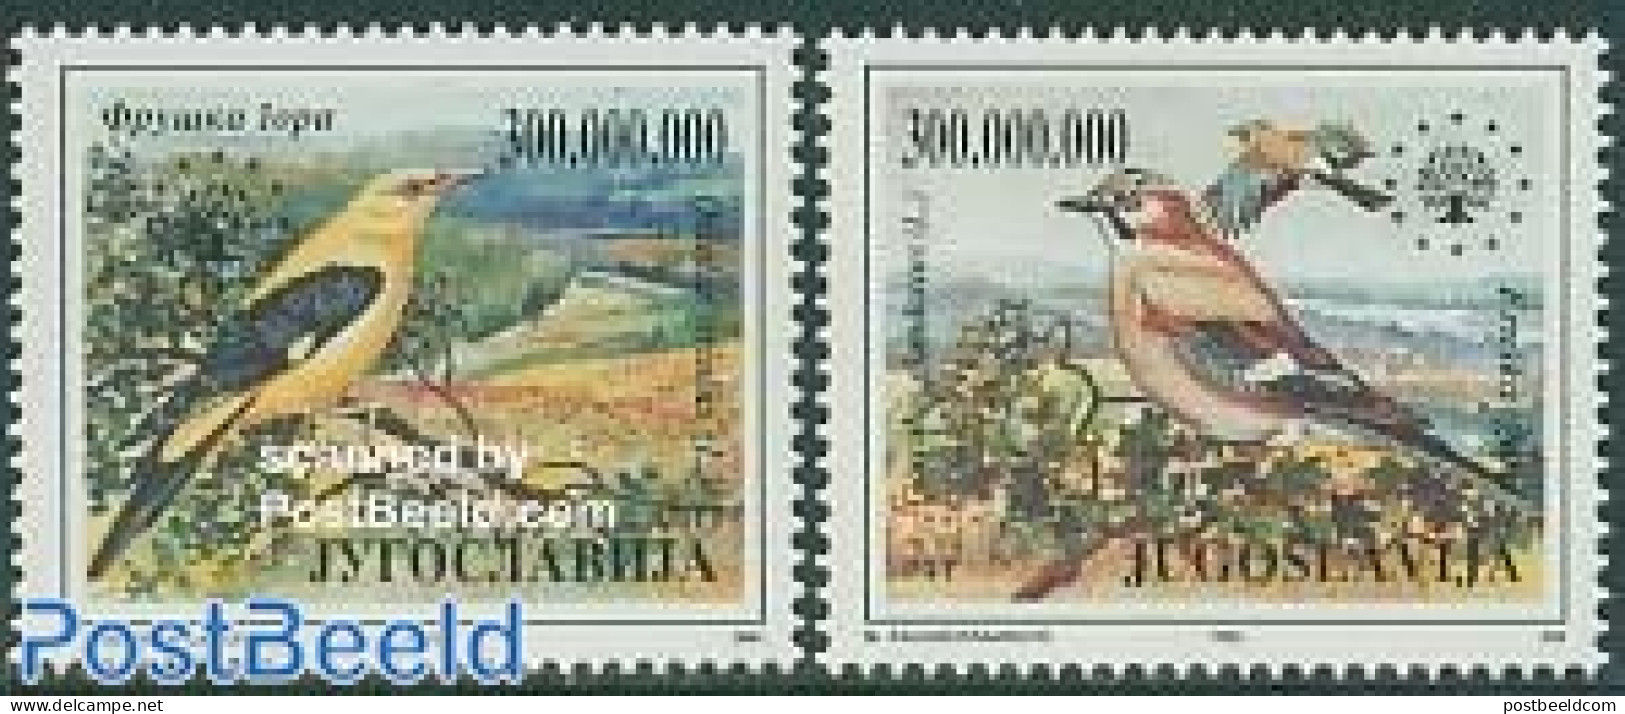 Yugoslavia 1993 European Nature Conservation, Birds 2v, Mint NH, History - Nature - Europa Hang-on Issues - Birds - Nuevos